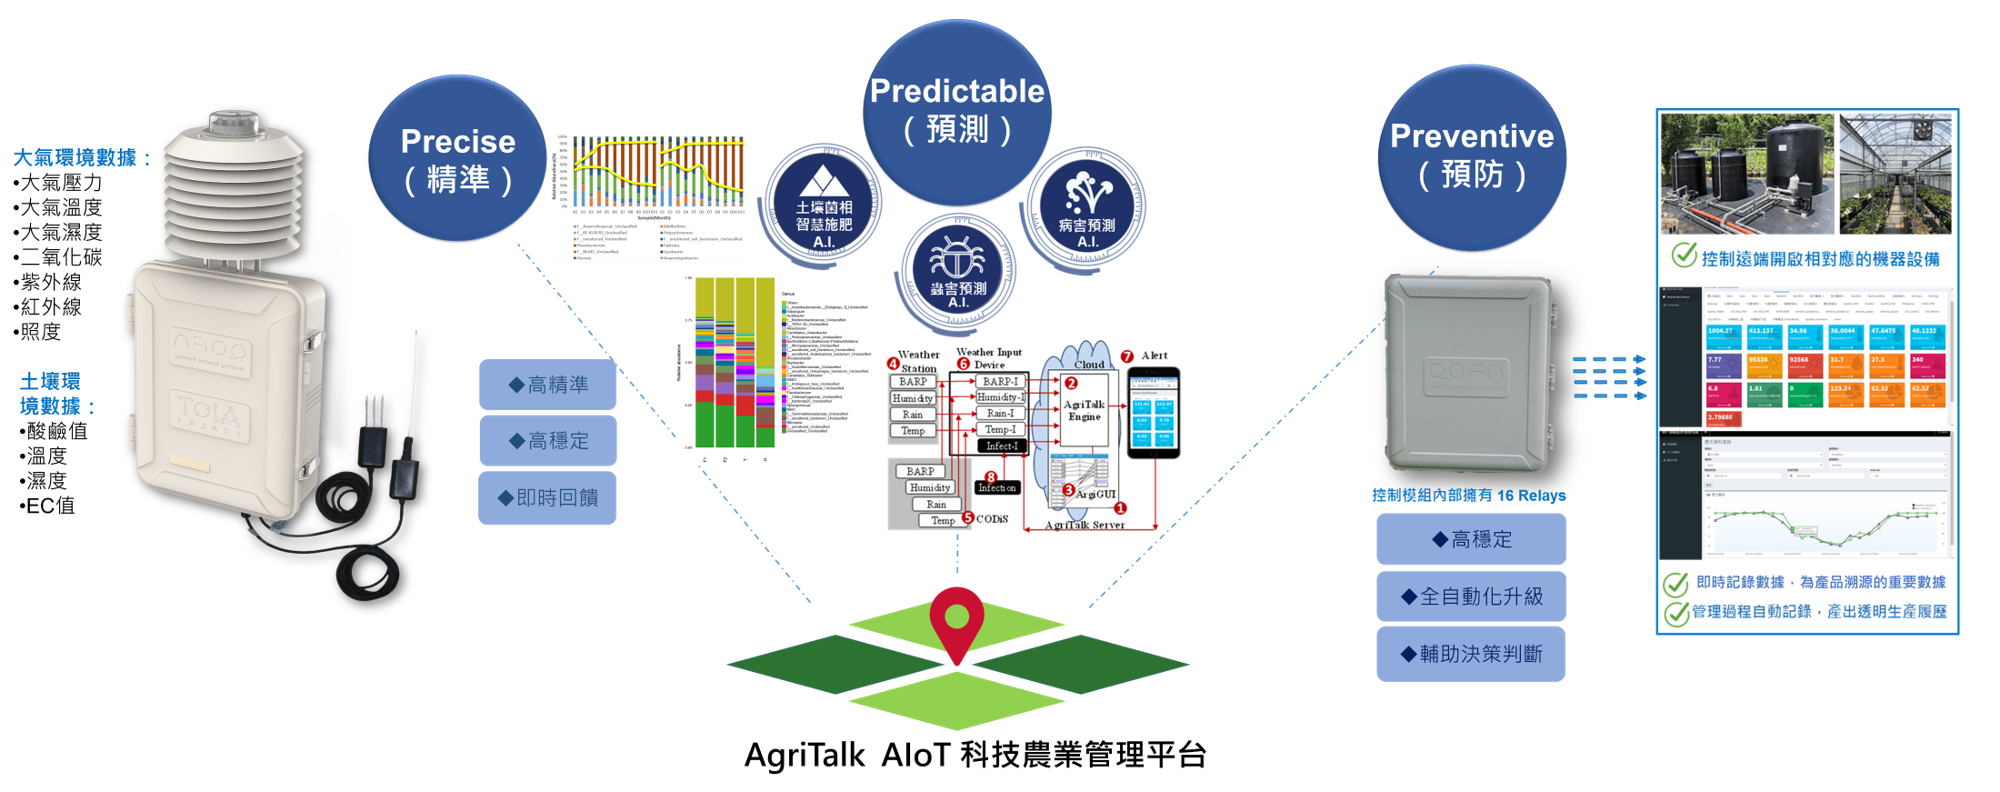 AIoT科技農業3P: Predictable （預測）、Preventive（預防）、Precise（精準）從監控、預測至無毒製劑投放決策